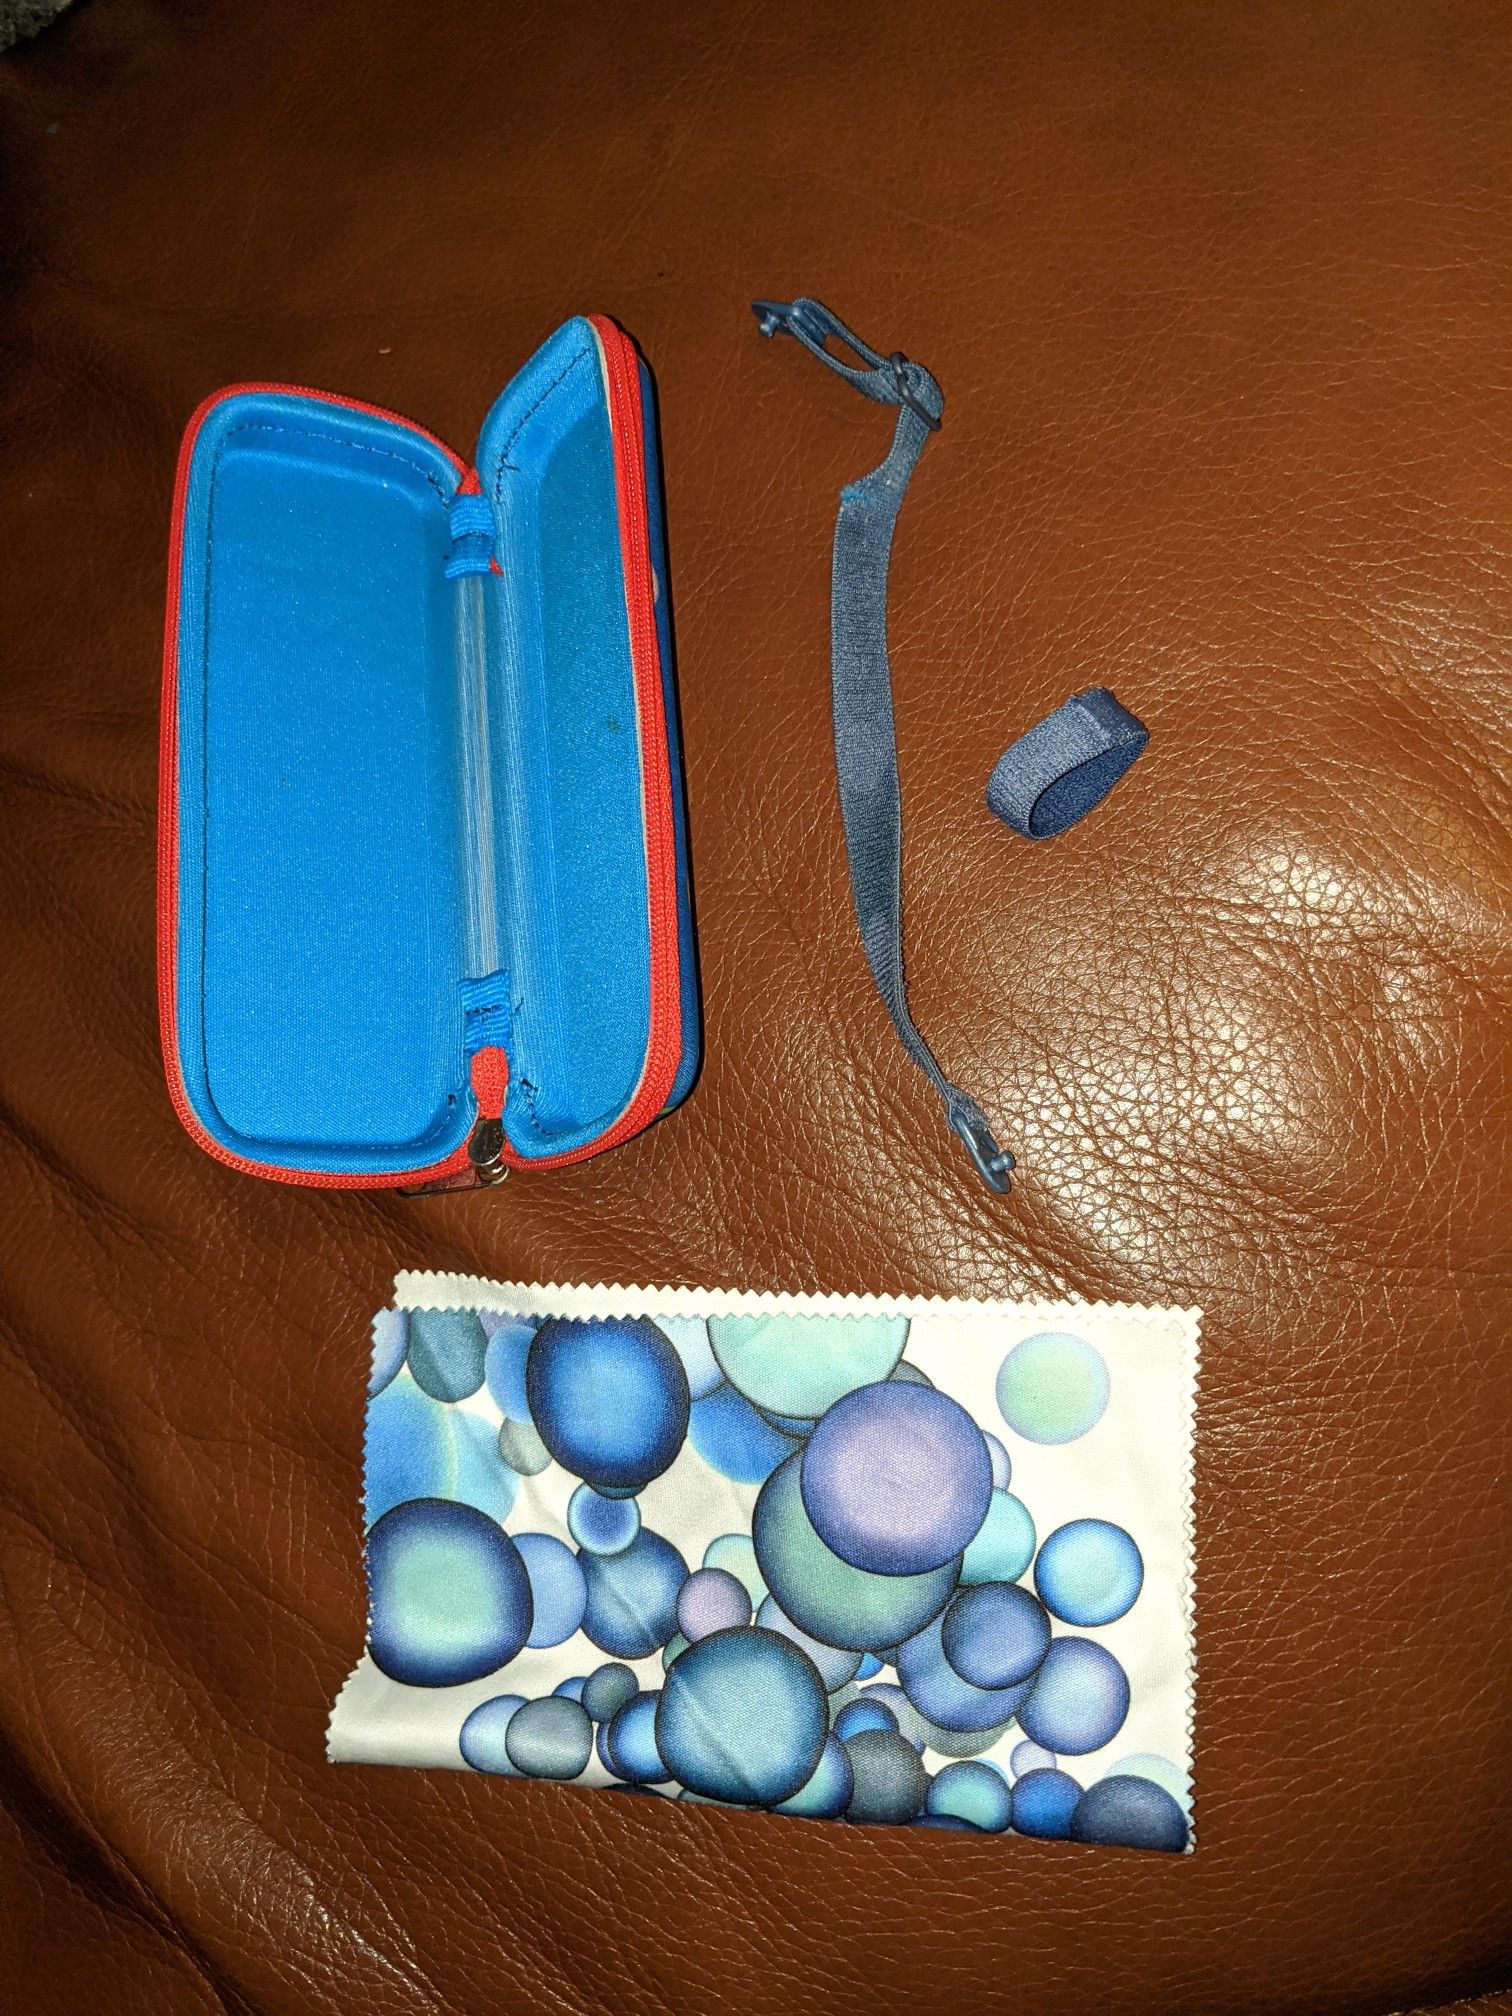 MIRAFLEX KIDS Zippered Glasses Case w/ Blue Elastic Strap, Good Used Condition.